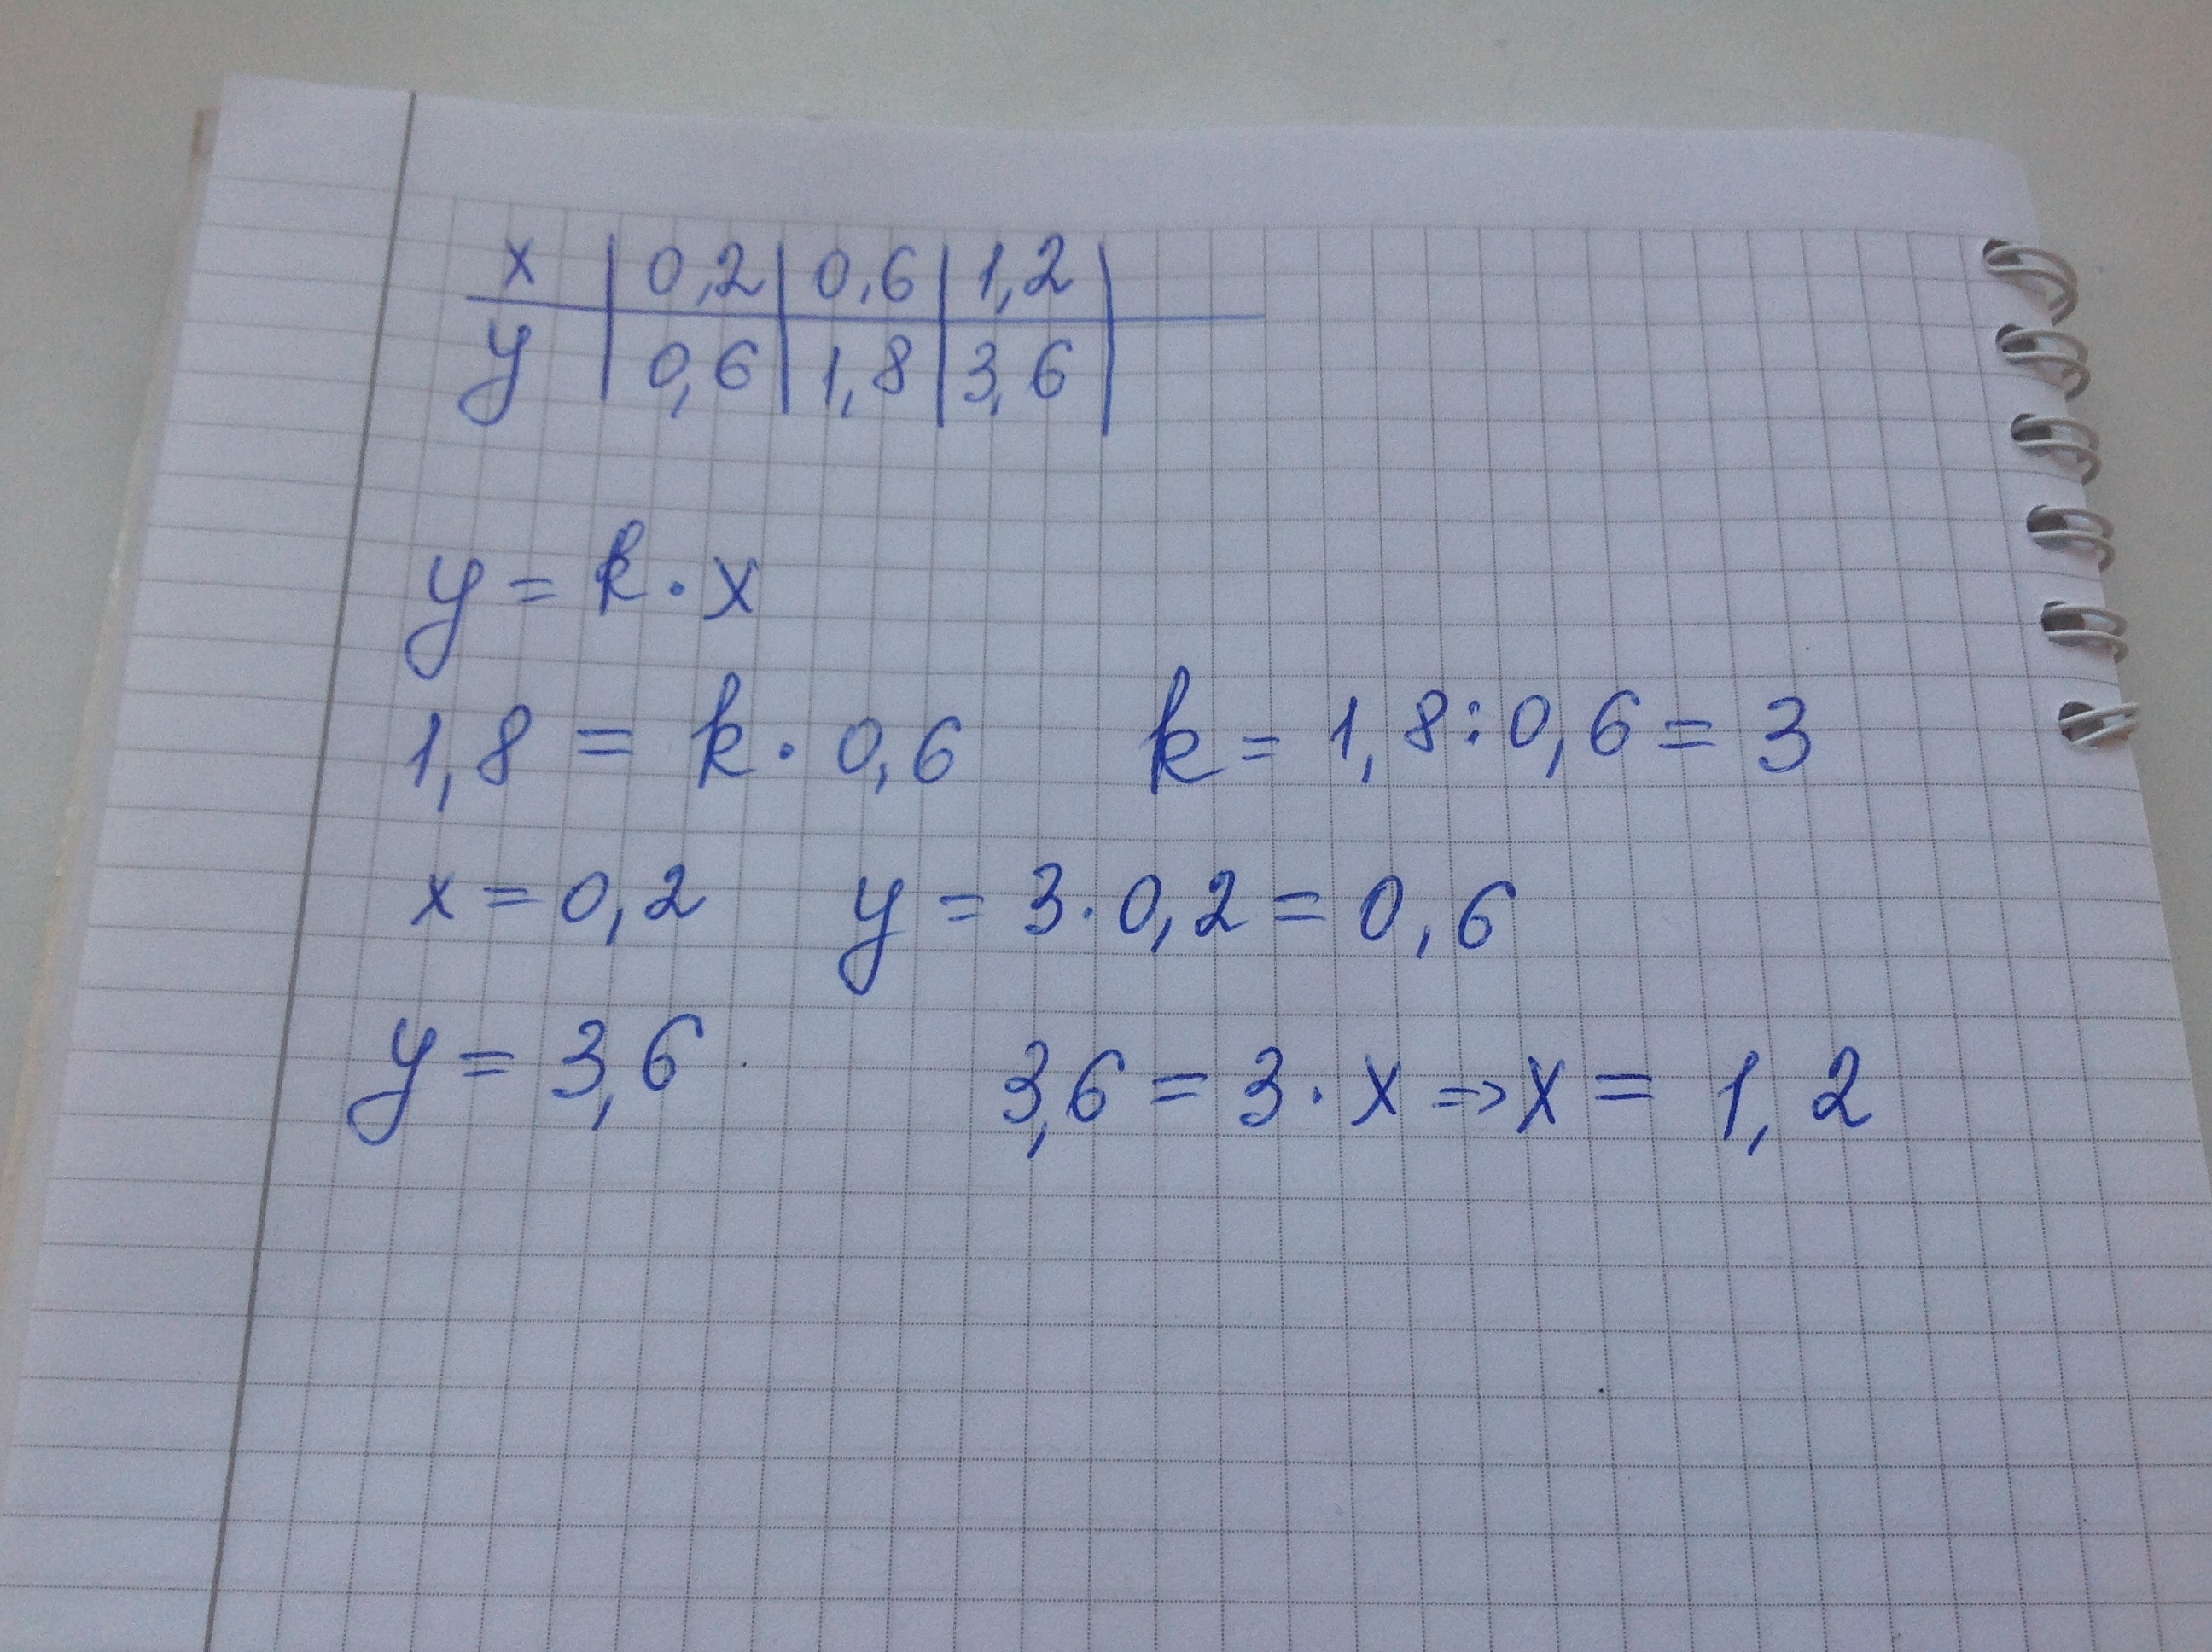 X 8 0 3 класс. Заполните таблицу , если величина yпрямо пропорциональна величине x. Заполните таблицу если величина y прямо пропорциональна величине x. Х У 0,6 3,6 0,8 6,6 таблица. Х -1 0 1 y1 1 1 1 y2 0 -1 0.